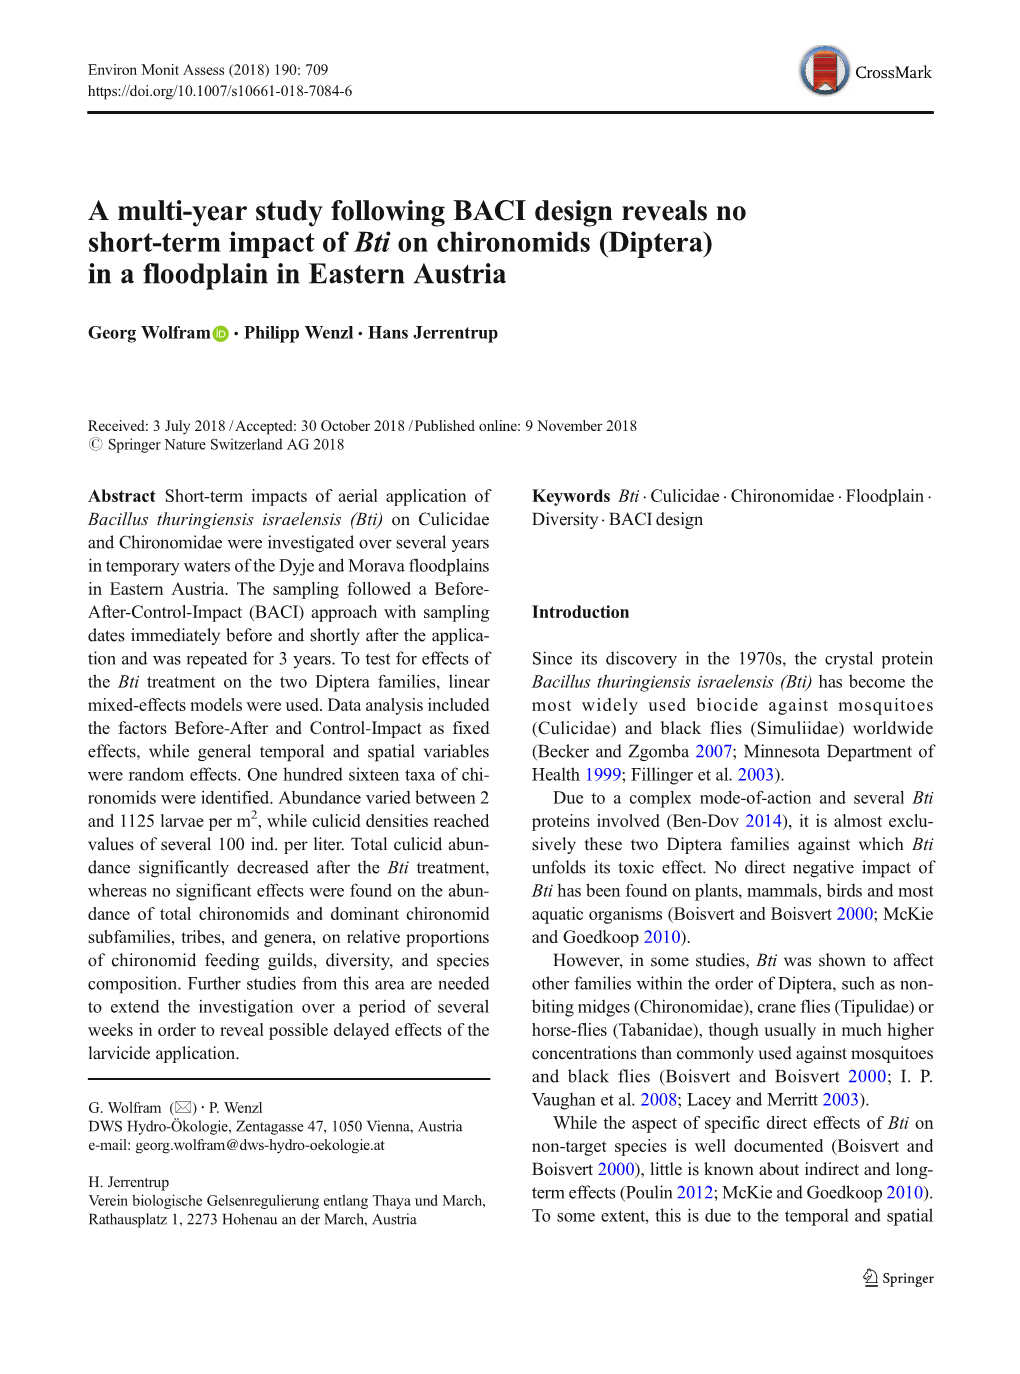 A Multi-Year Study Following BACI Design Reveals No Short-Term Impact of Bti on Chironomids (Diptera) in a Floodplain in Eastern Austria